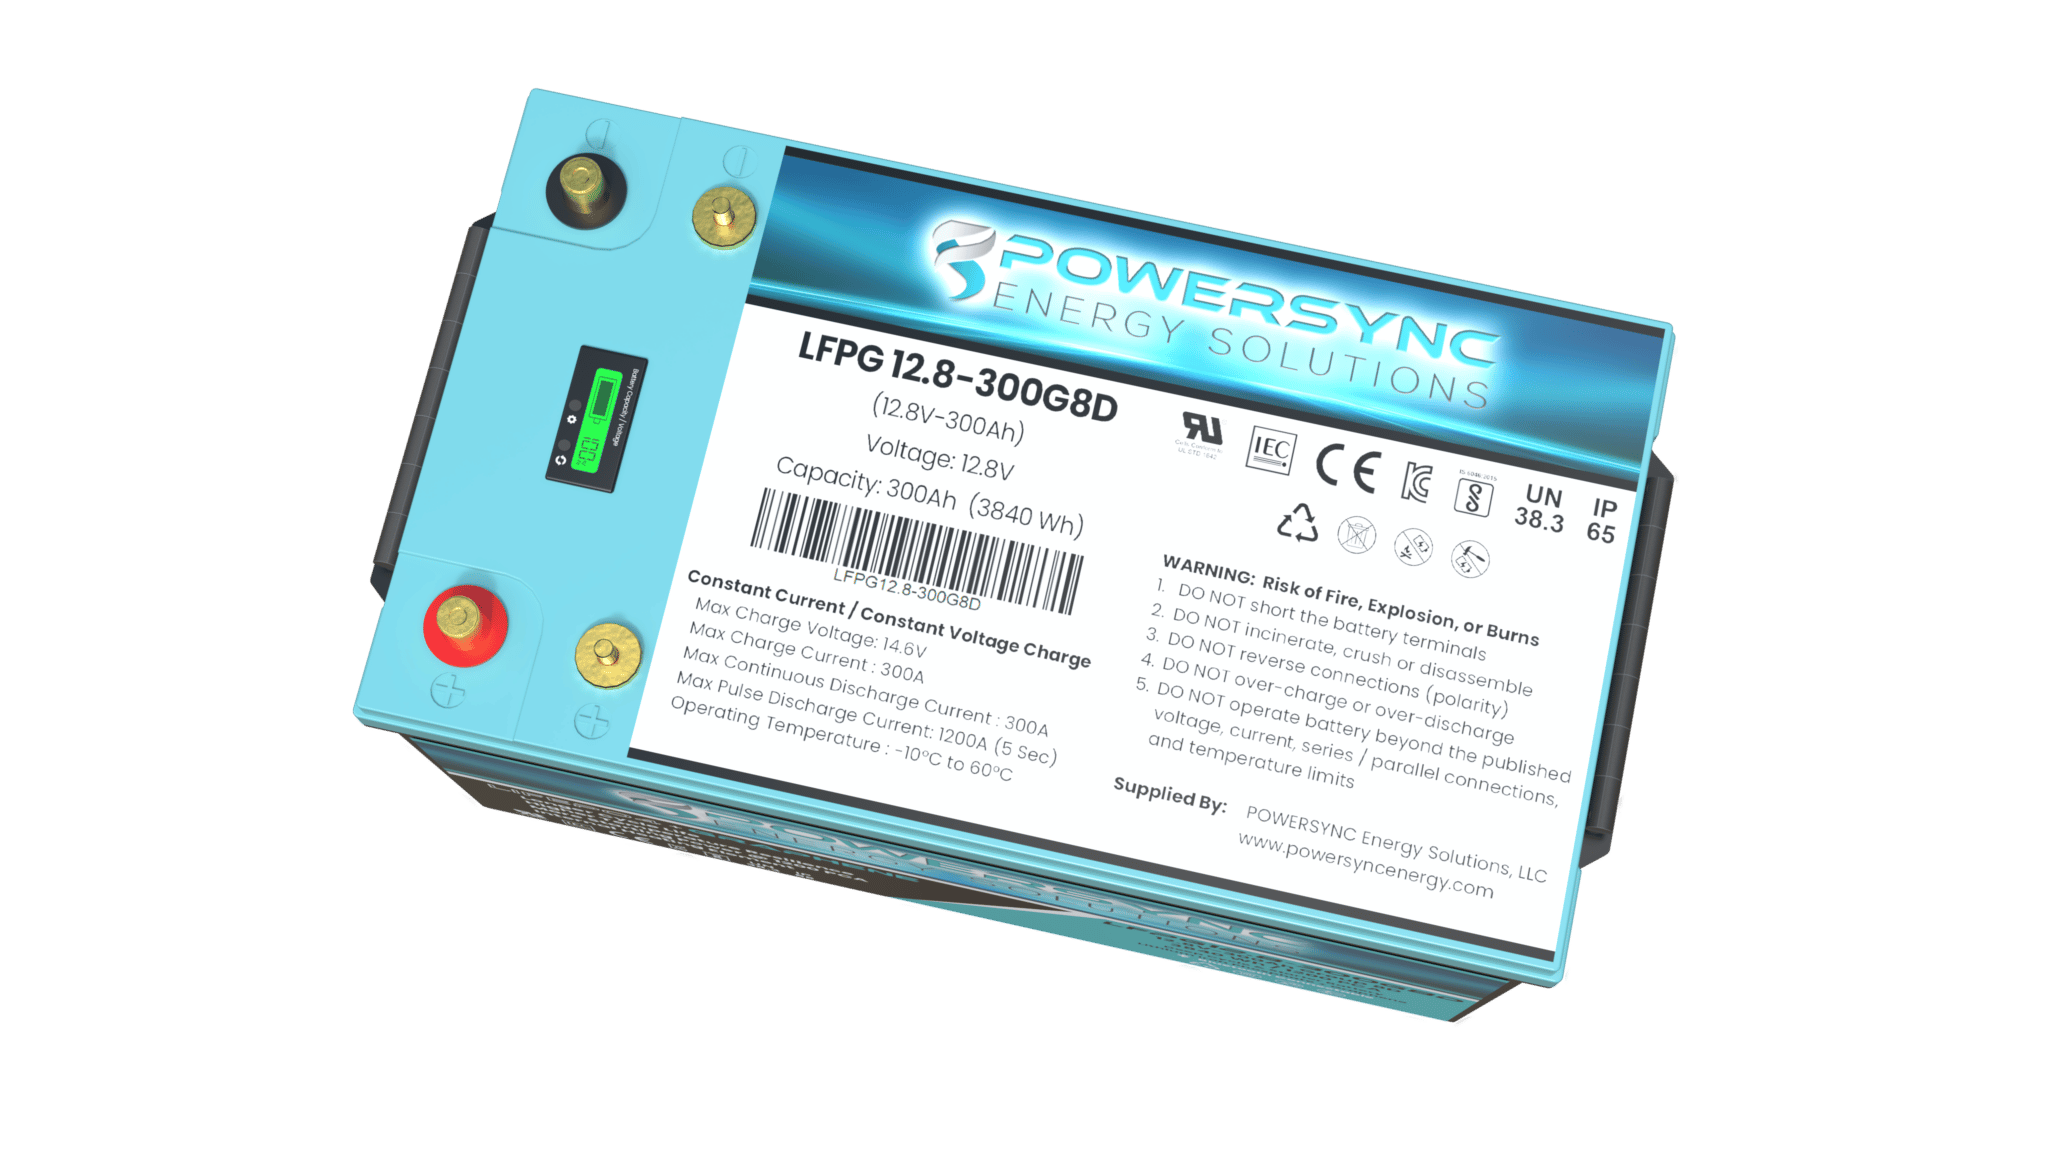 LFPG12.8-80G24 LiFePO4+Graphene Dual Purpose Lithium Battery - POWERSYNC  Energy Solutions